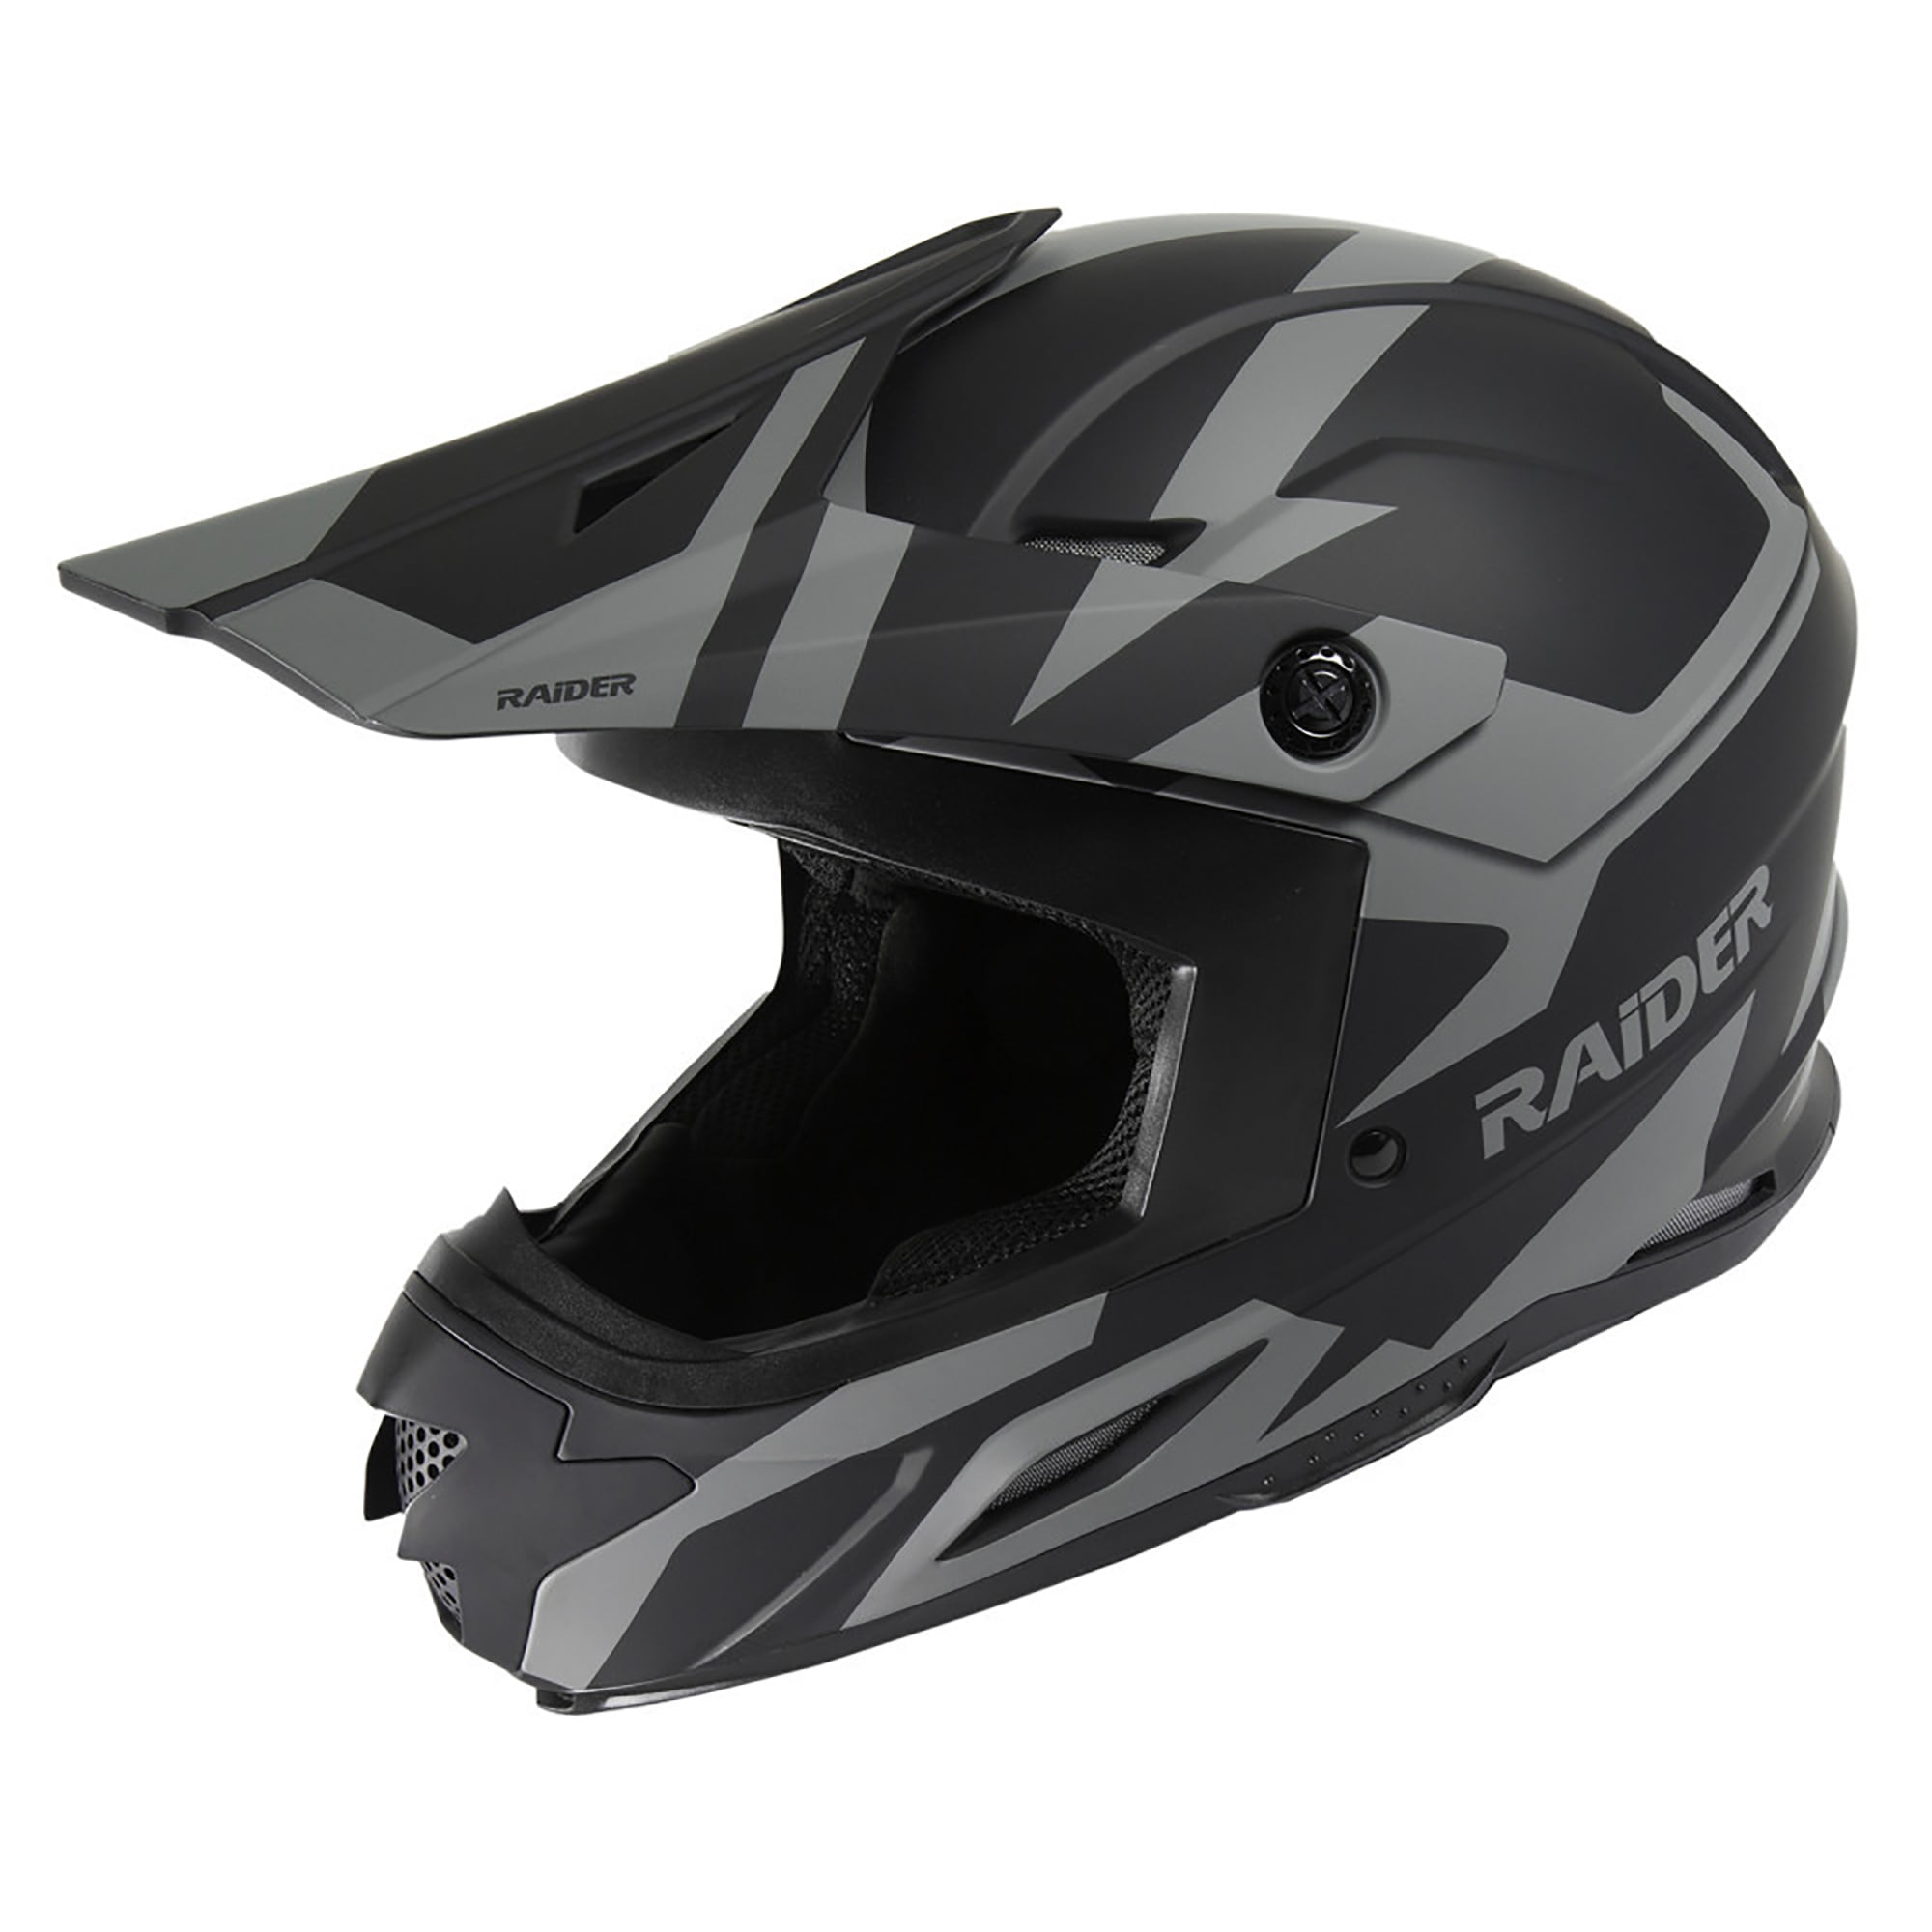 Raider Z7 MX Off-Road Helmet - Black/Silver - Small, Adult Unisex